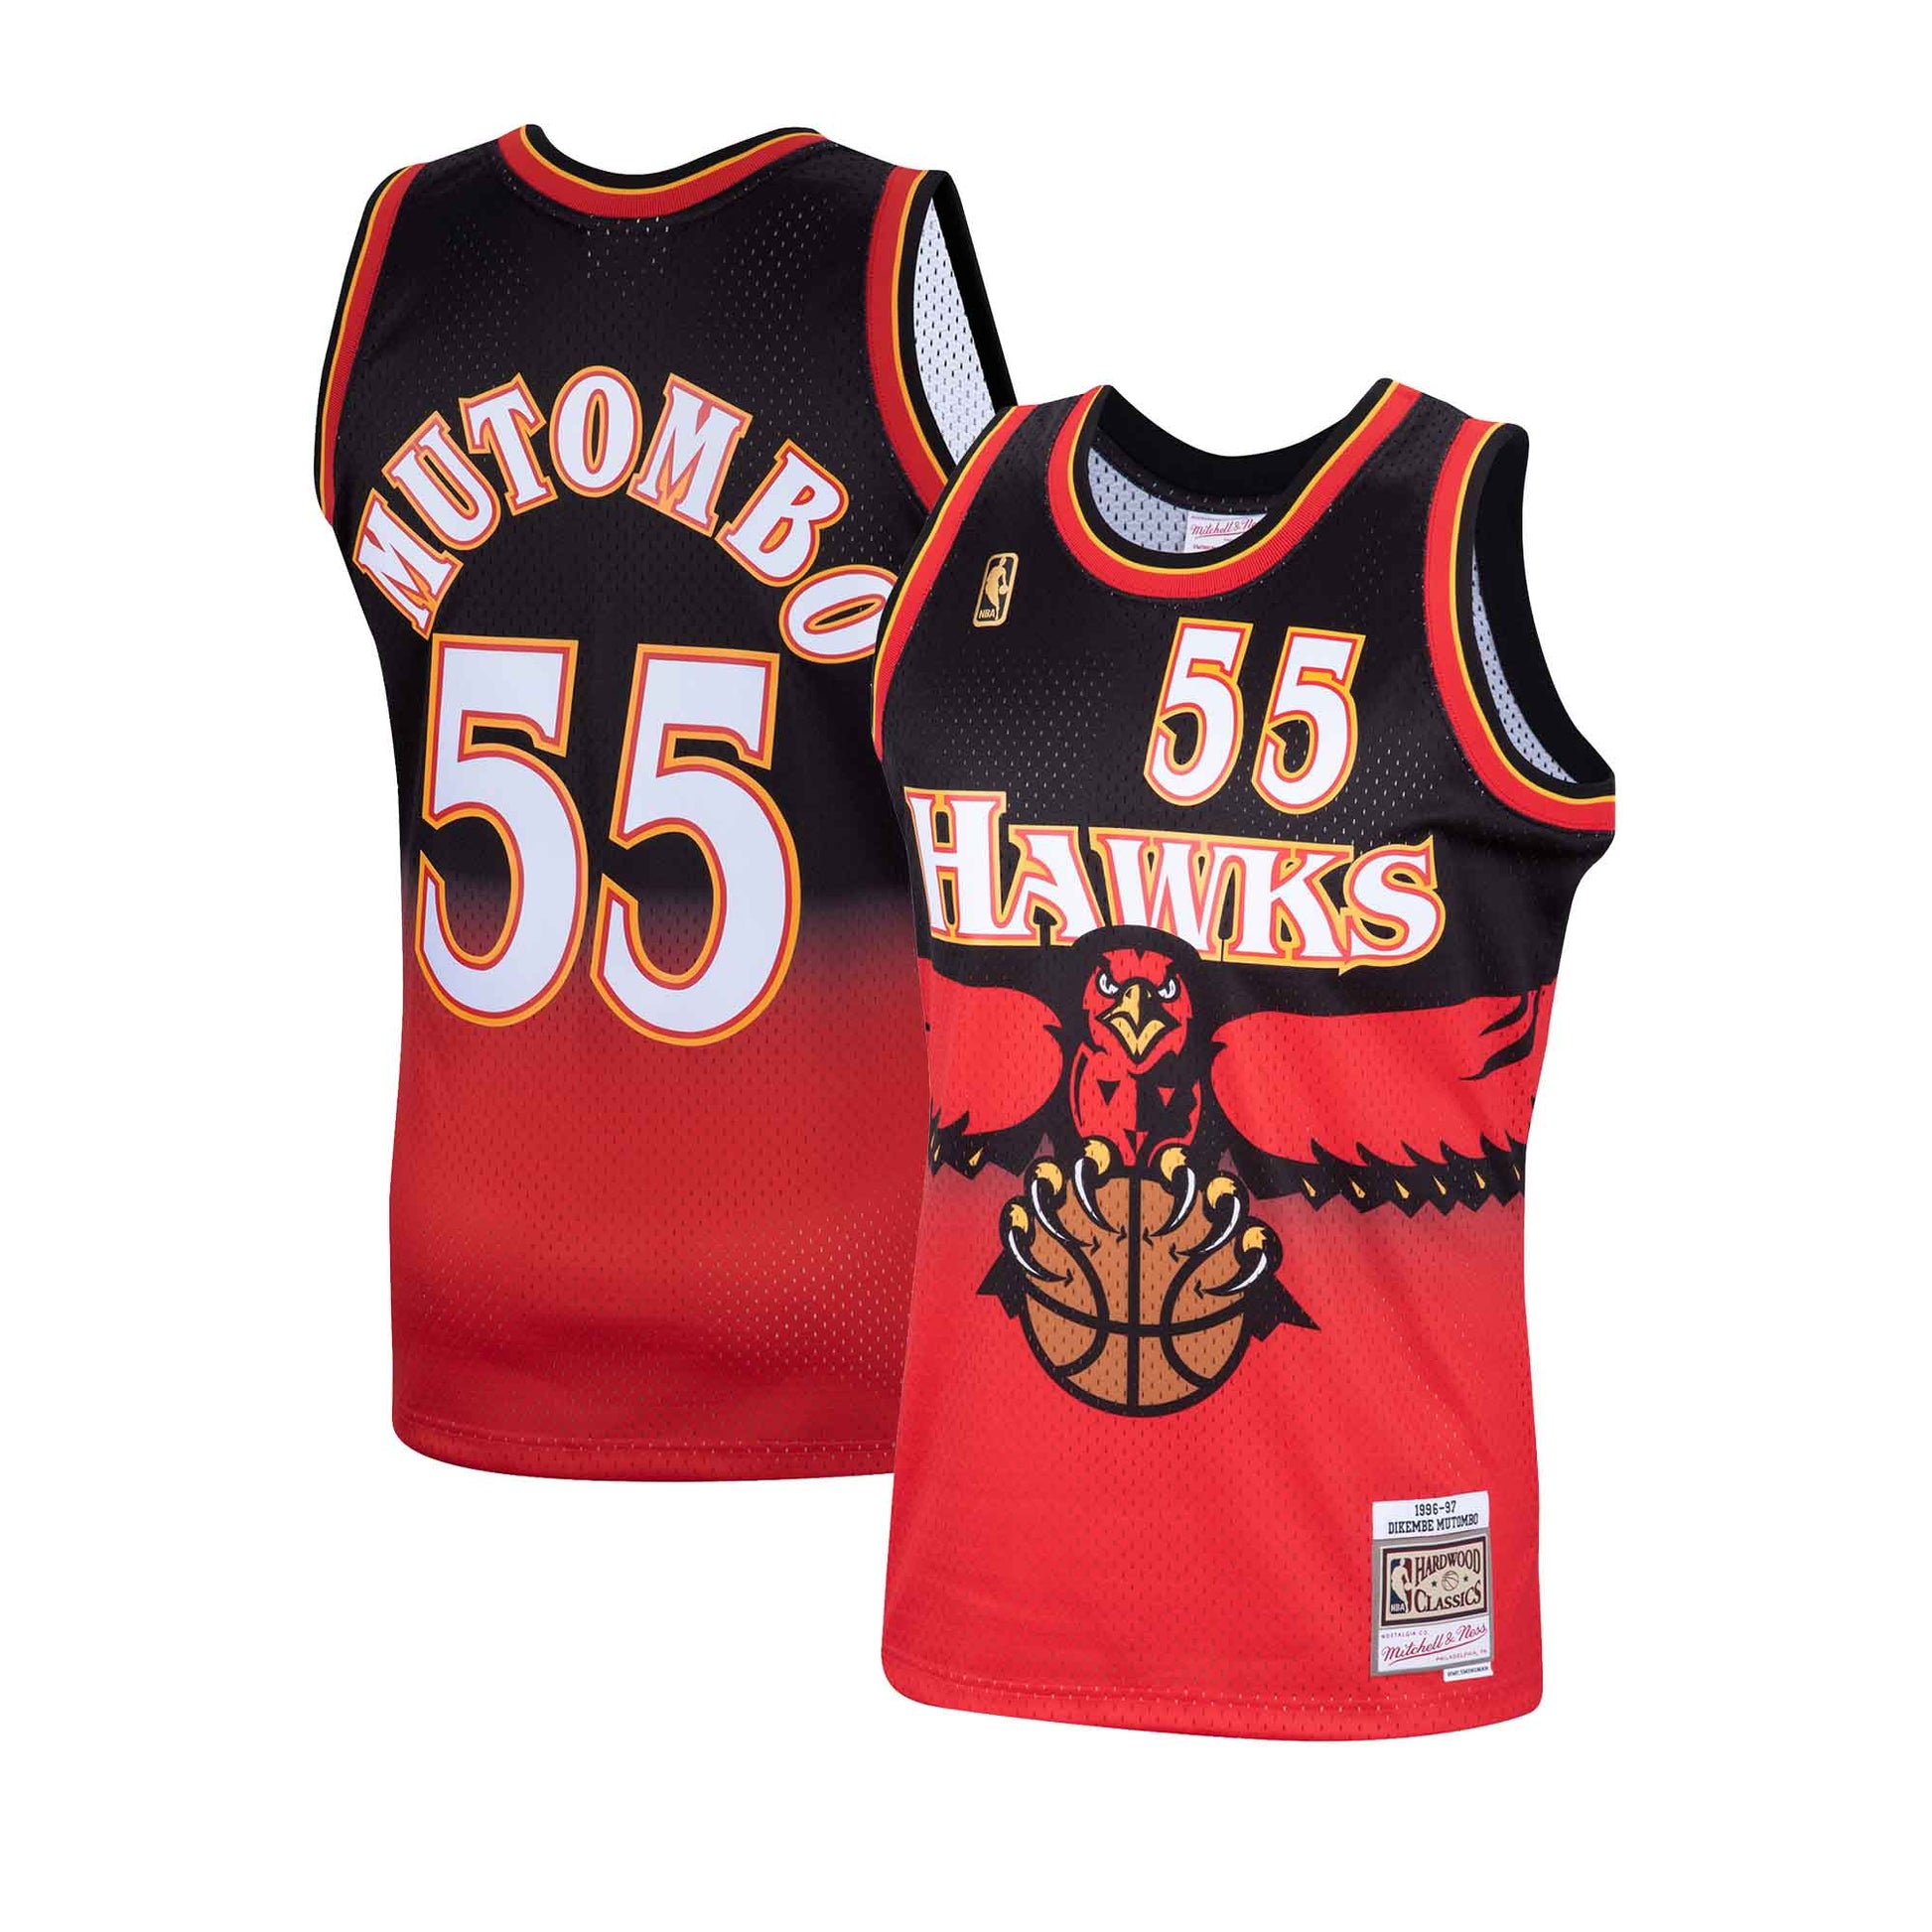 Atlanta Hawks retire Dikembe Mutombo's No. 55 jersey - Sports Illustrated